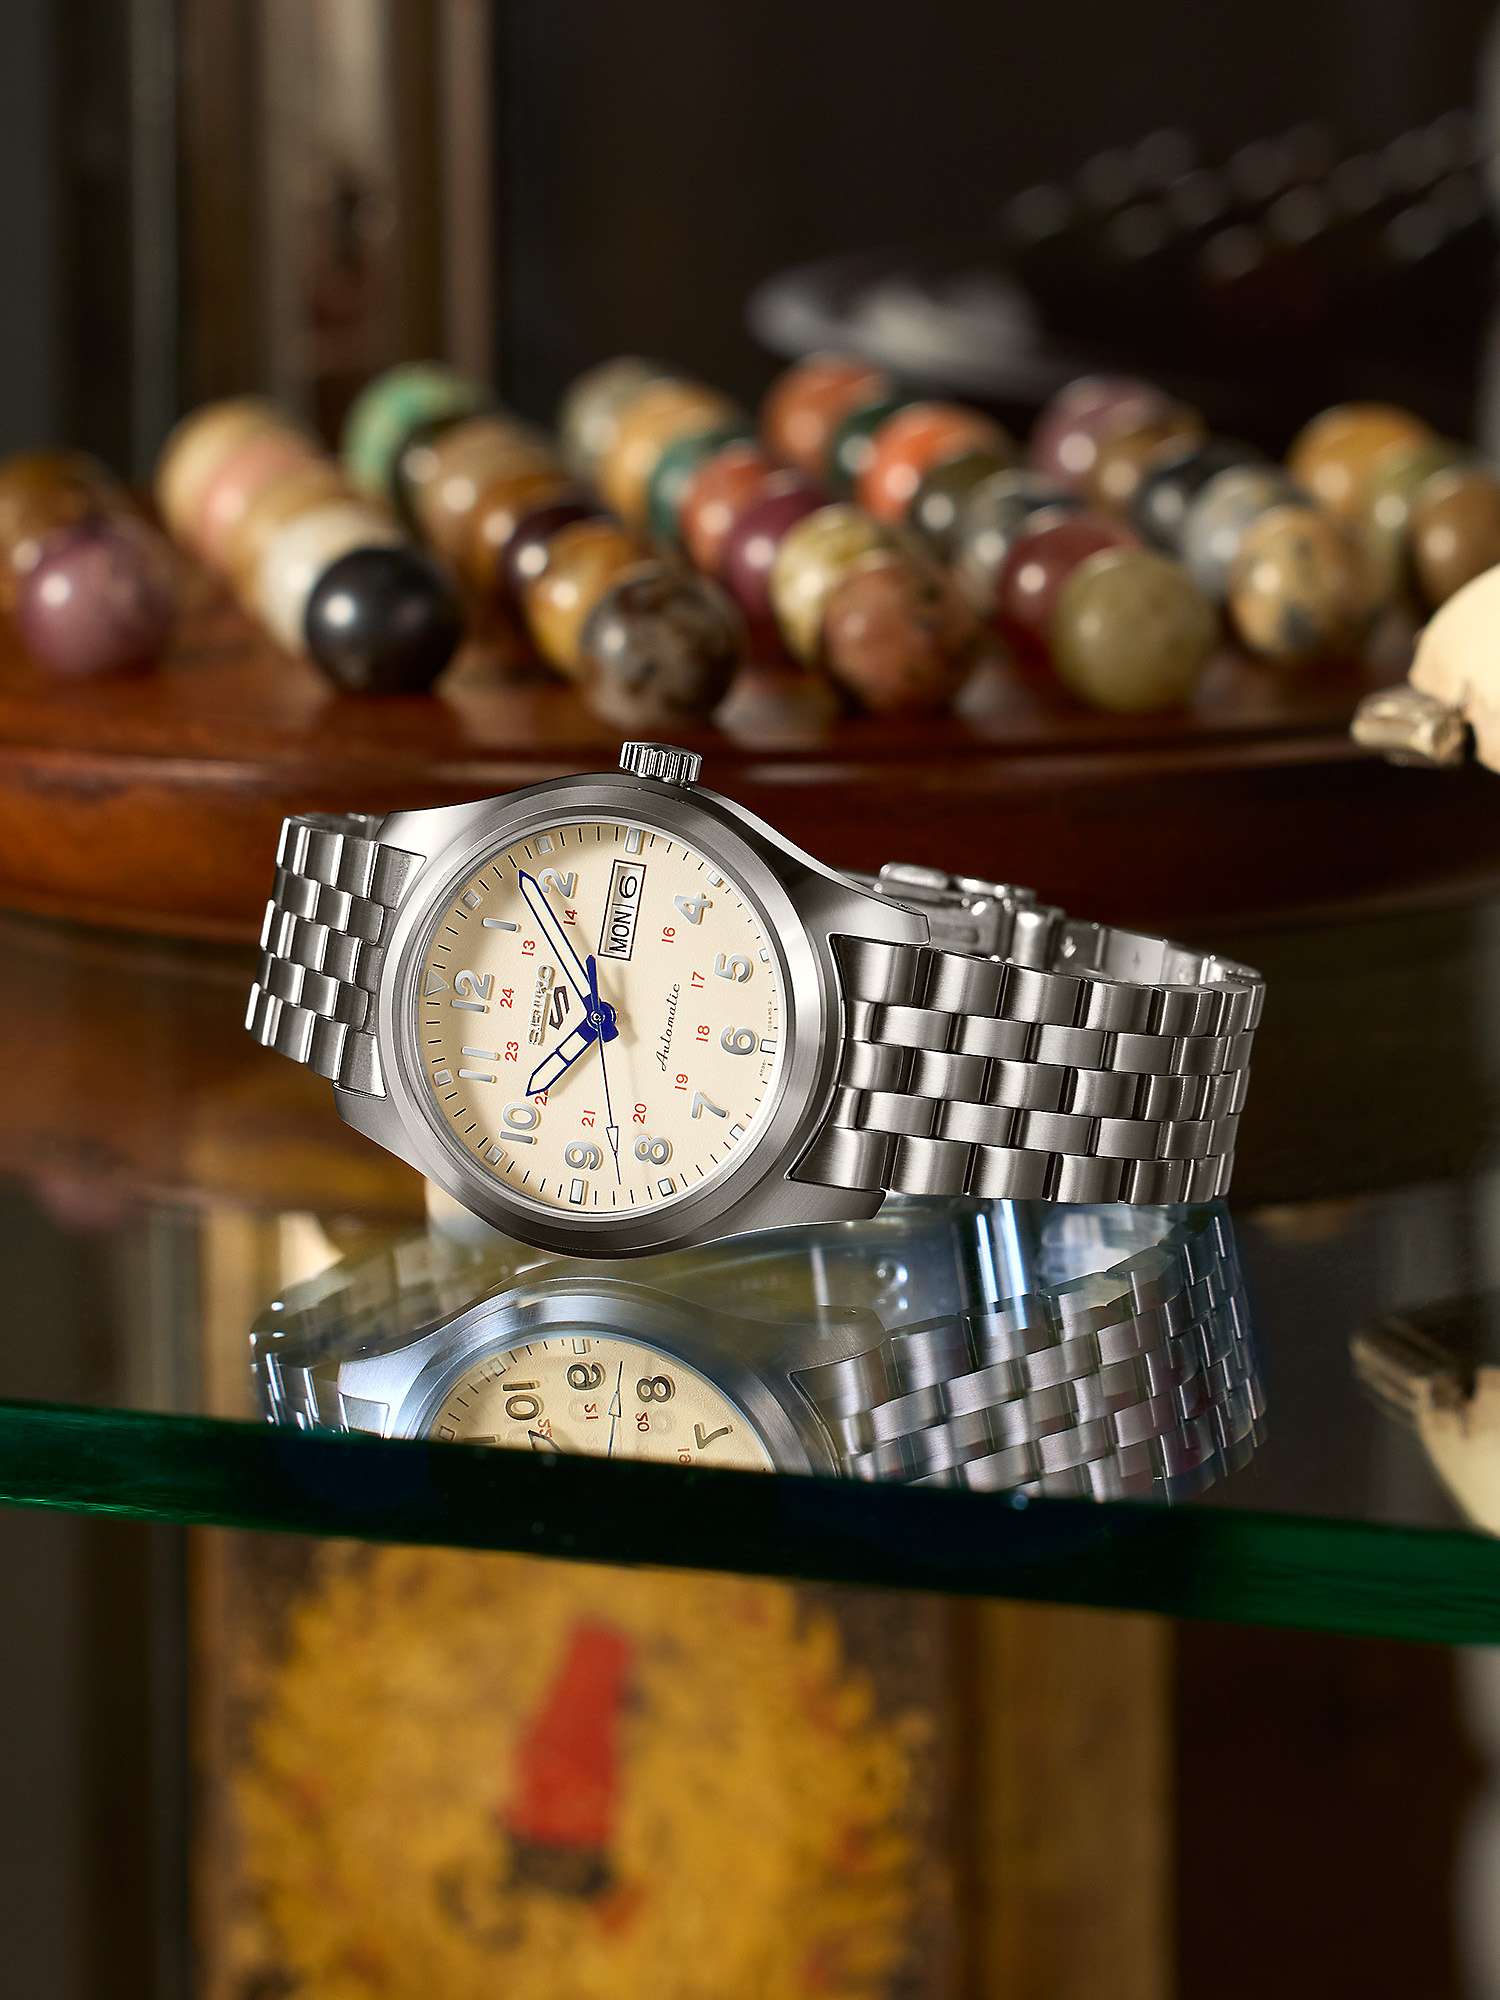 Buy Seiko SRPK41K1 Men's 5 Sports Laurel Limited Edition 110th Anniversary Bracelet Strap Watch, Cream/Silver Online at johnlewis.com